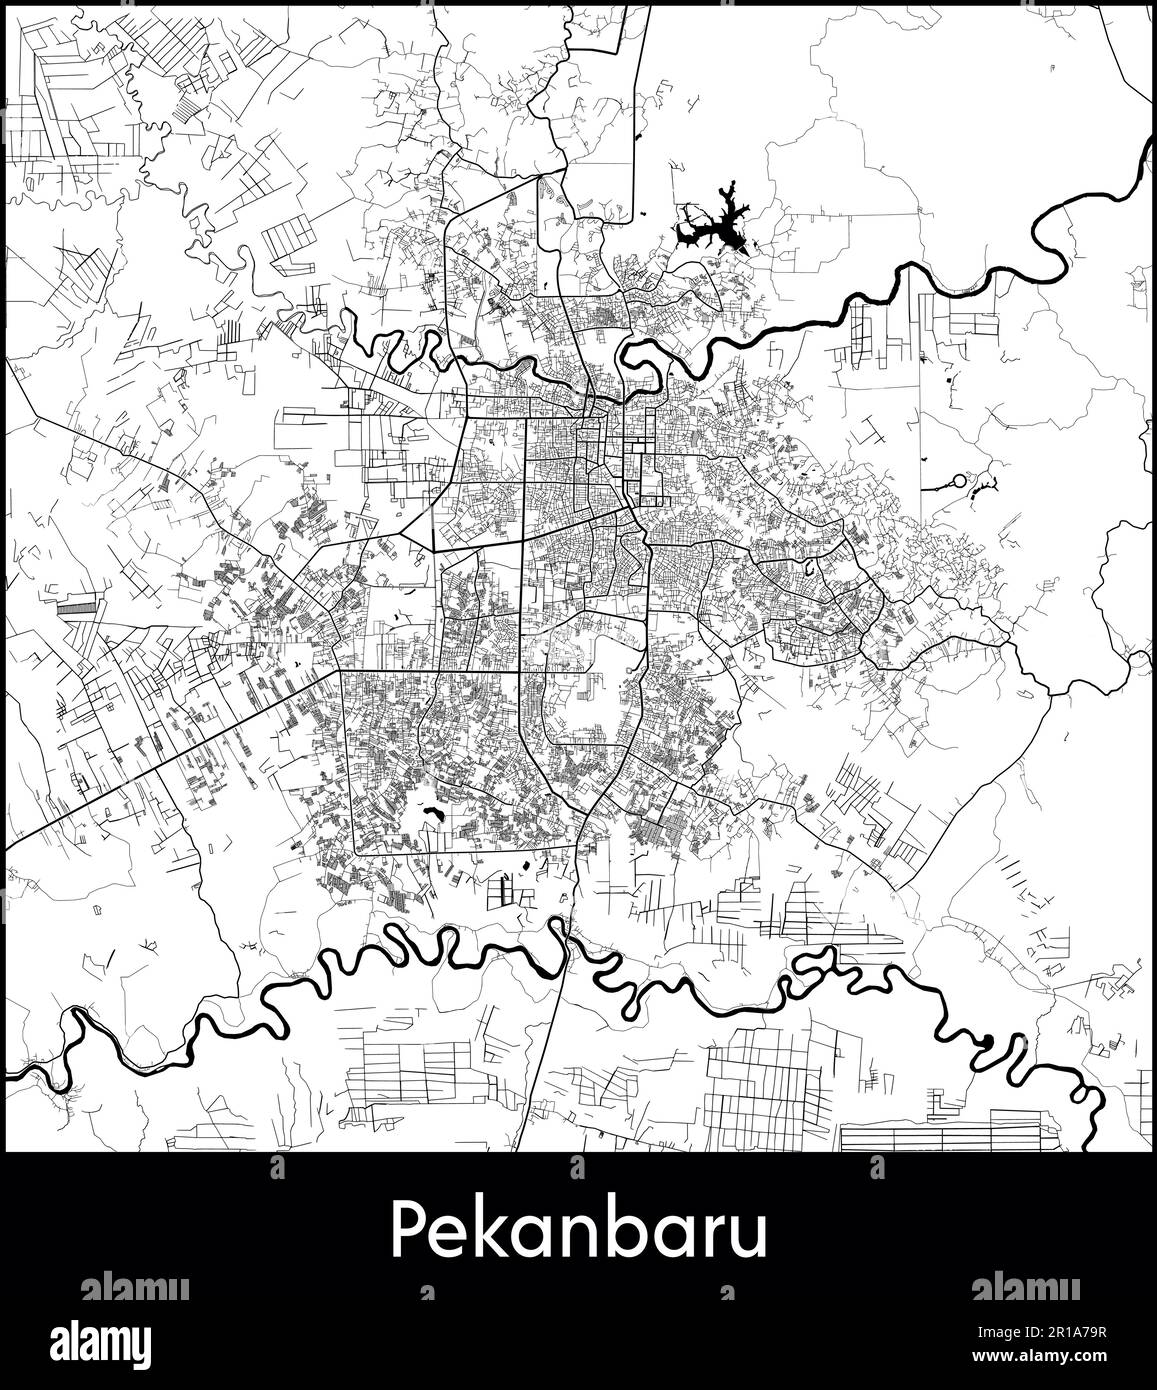 City Map Asia Indonesia Pekanbaru vector illustration Stock Vector